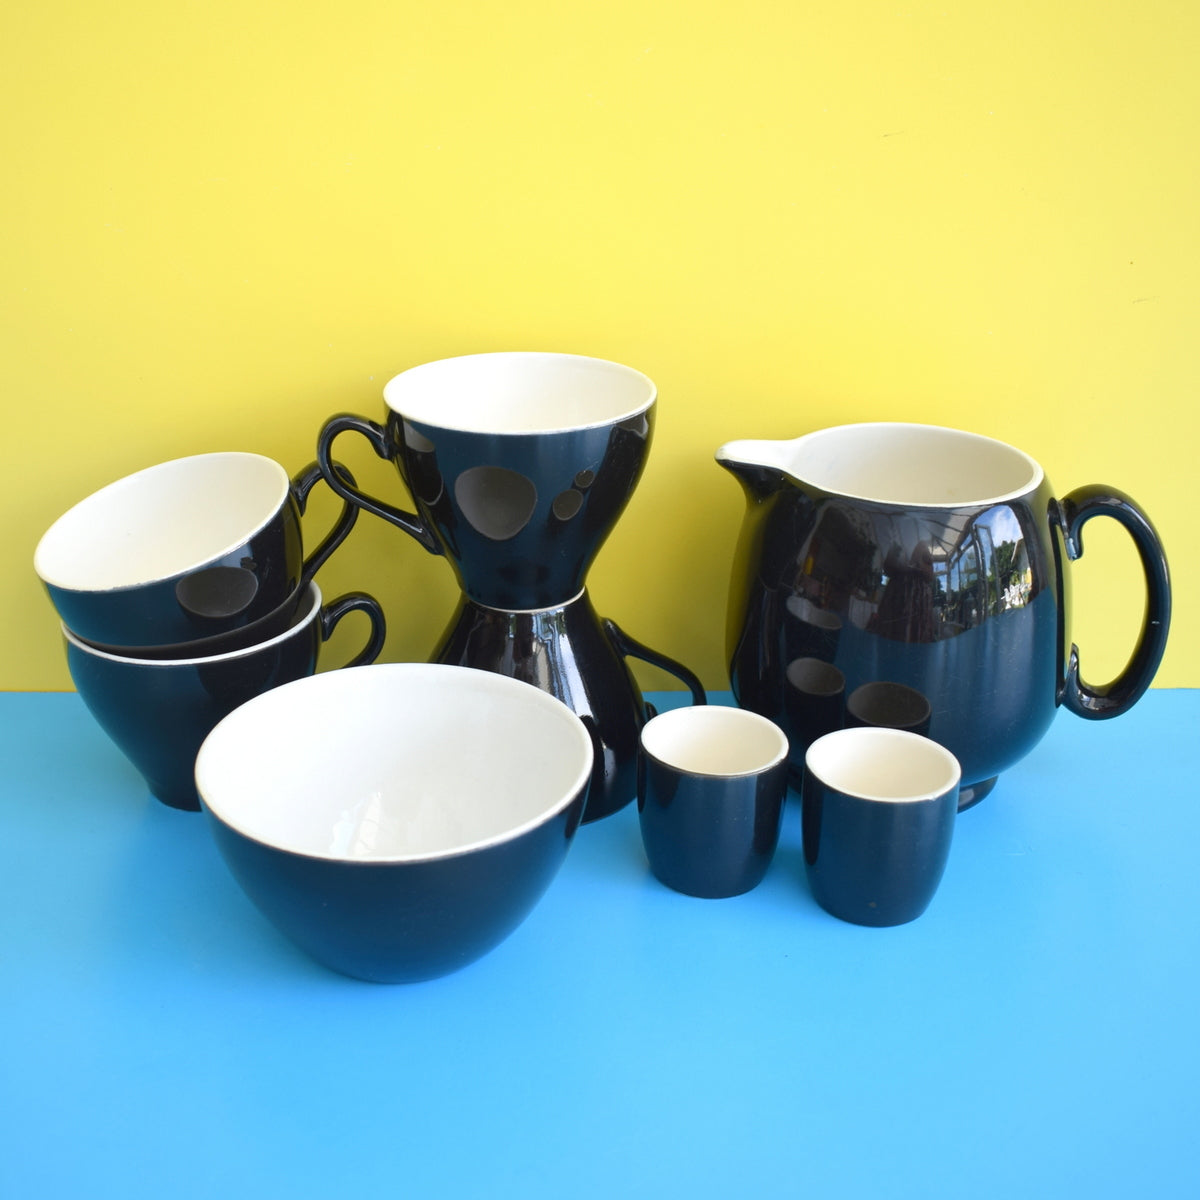 Vintage 1950s Black & White Custard Jug, Egg Cups, Sugar Bowl & Tea Cups - Ridgway Homemaker / Alfred Meakin Parisienne